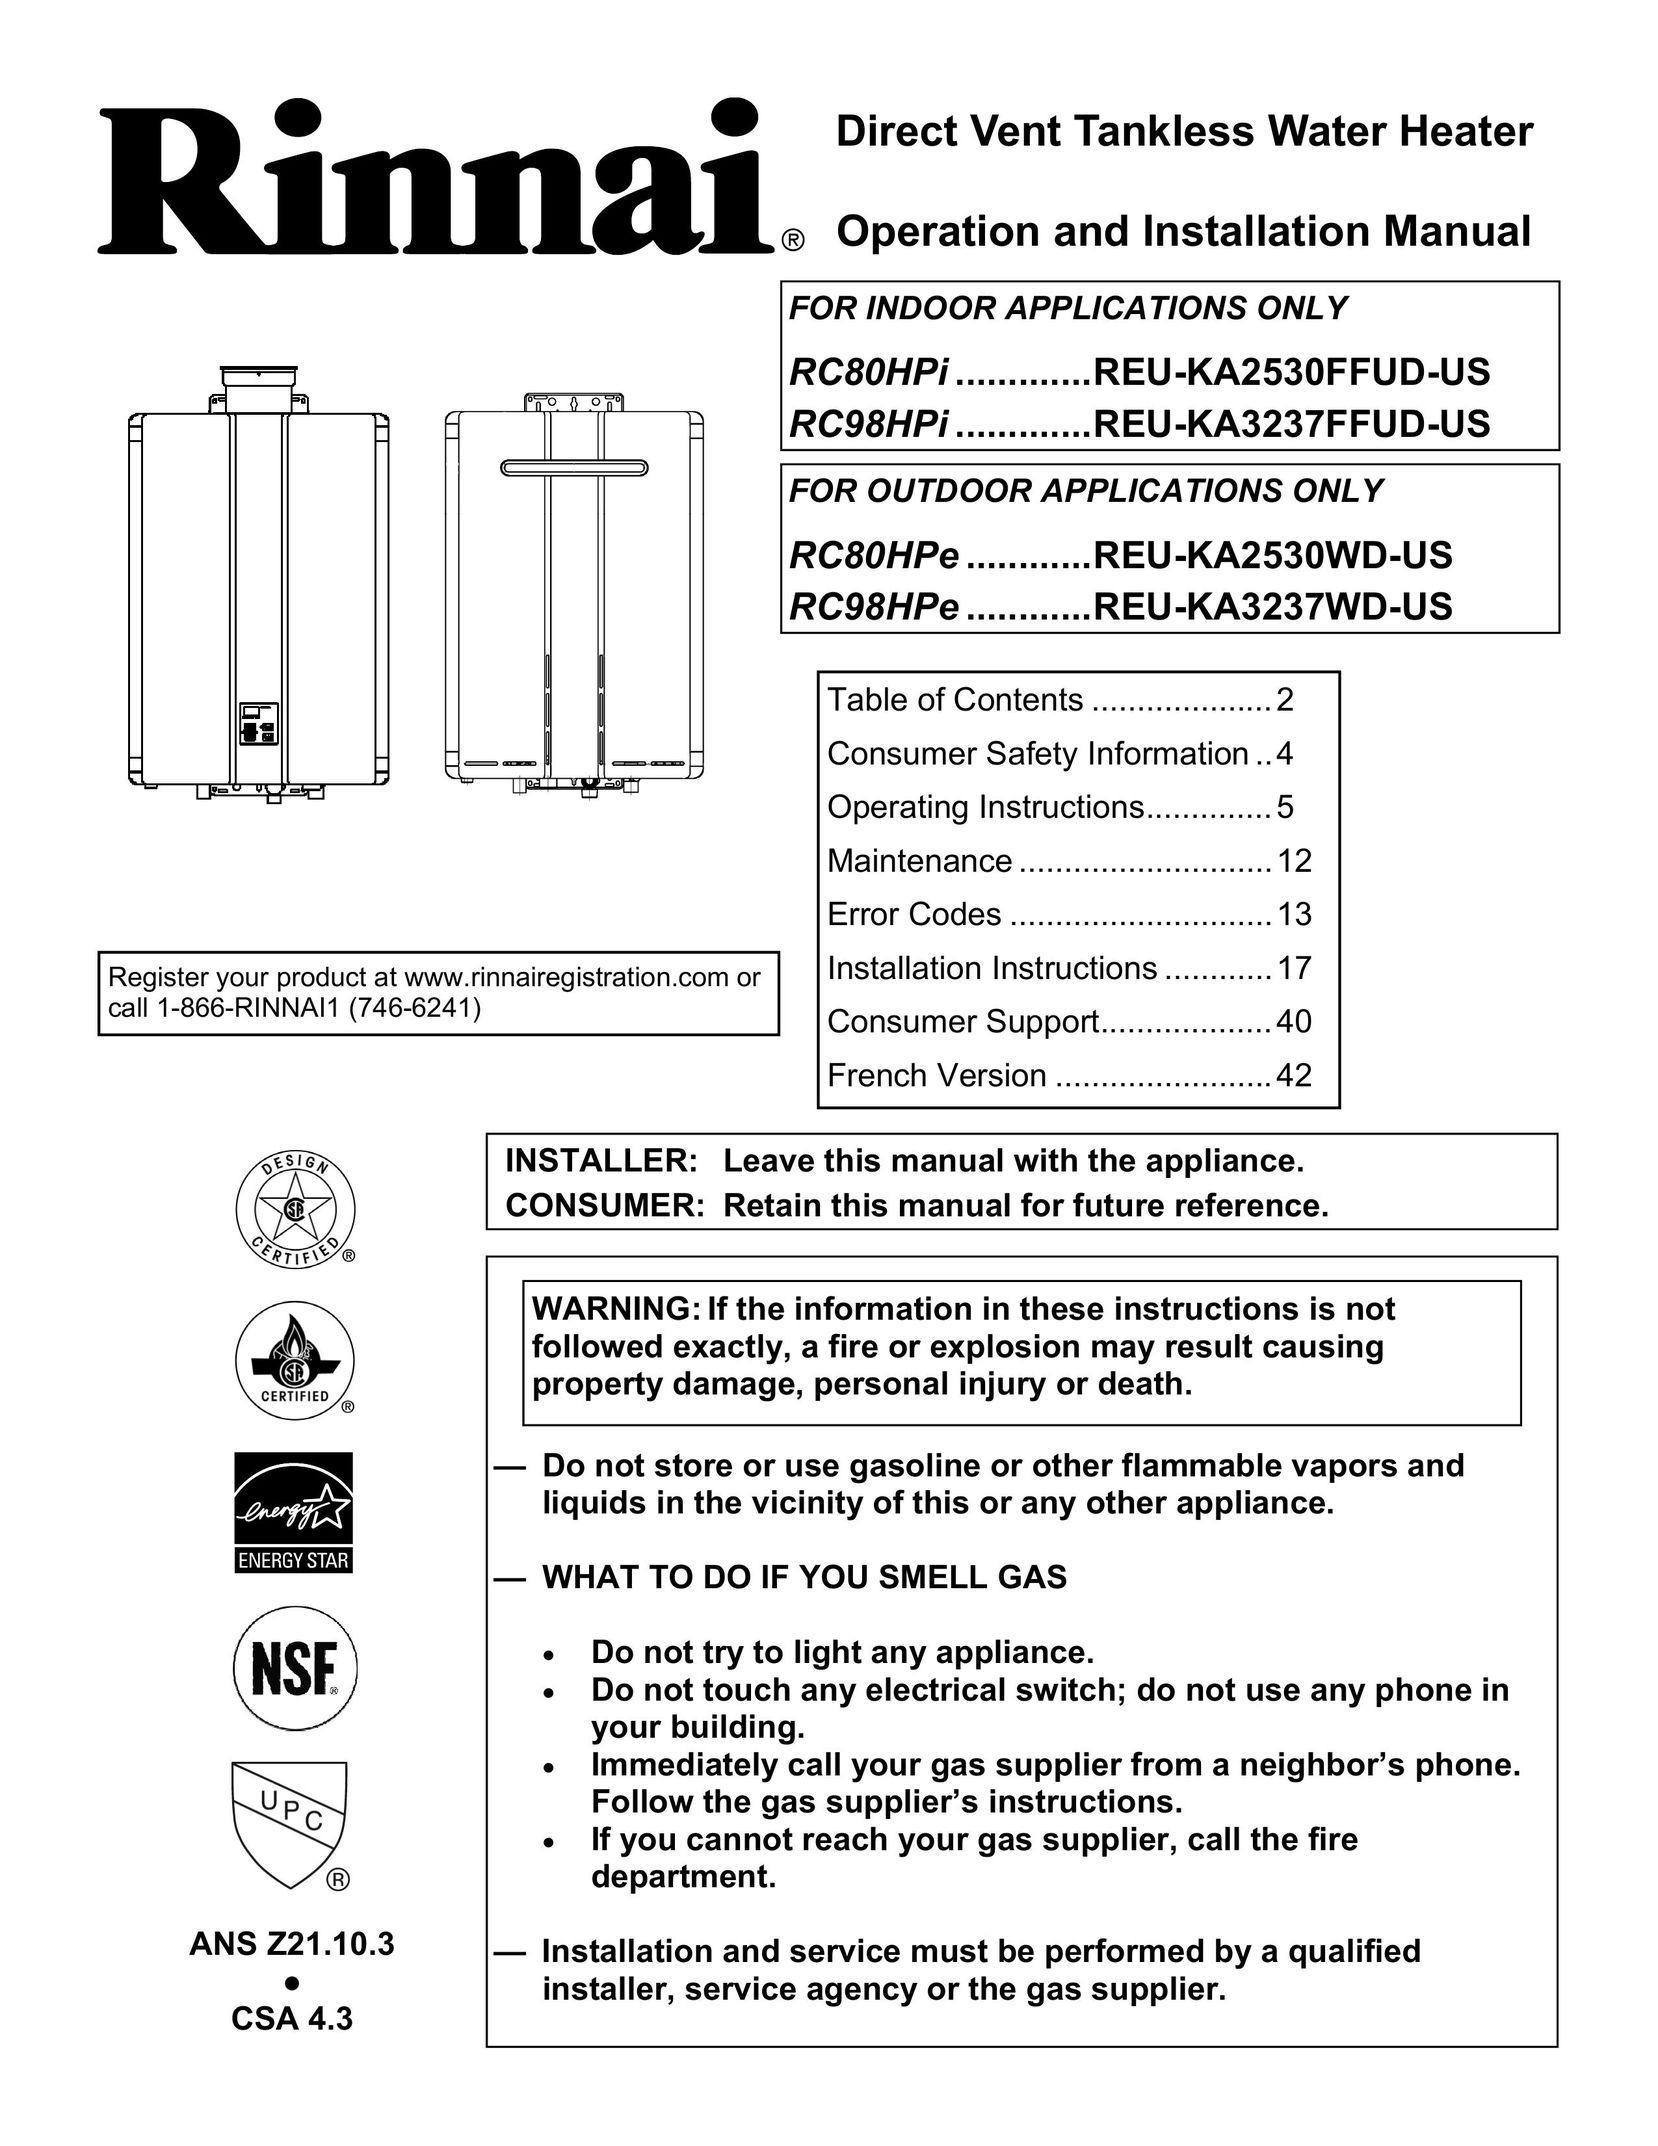 Rinnai RC98HPI Water Heater User Manual